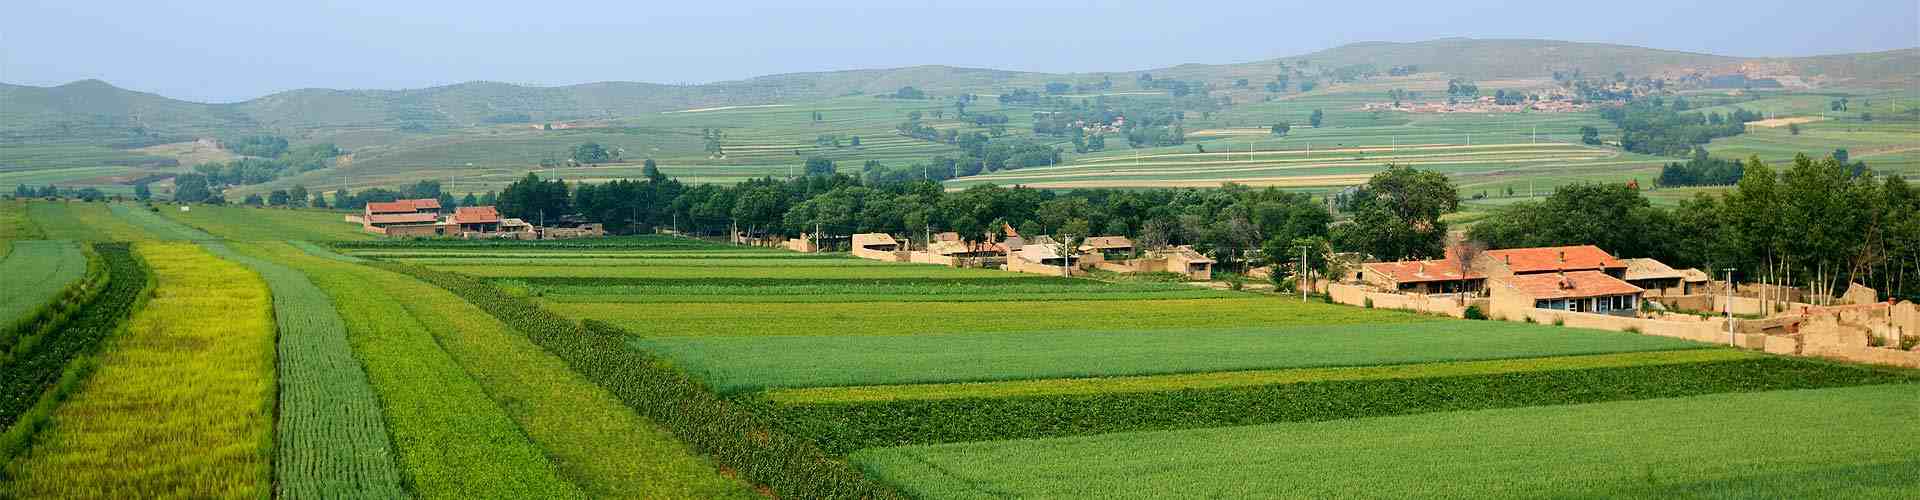 Casas rurales en Touro
           
           


          
          
          
